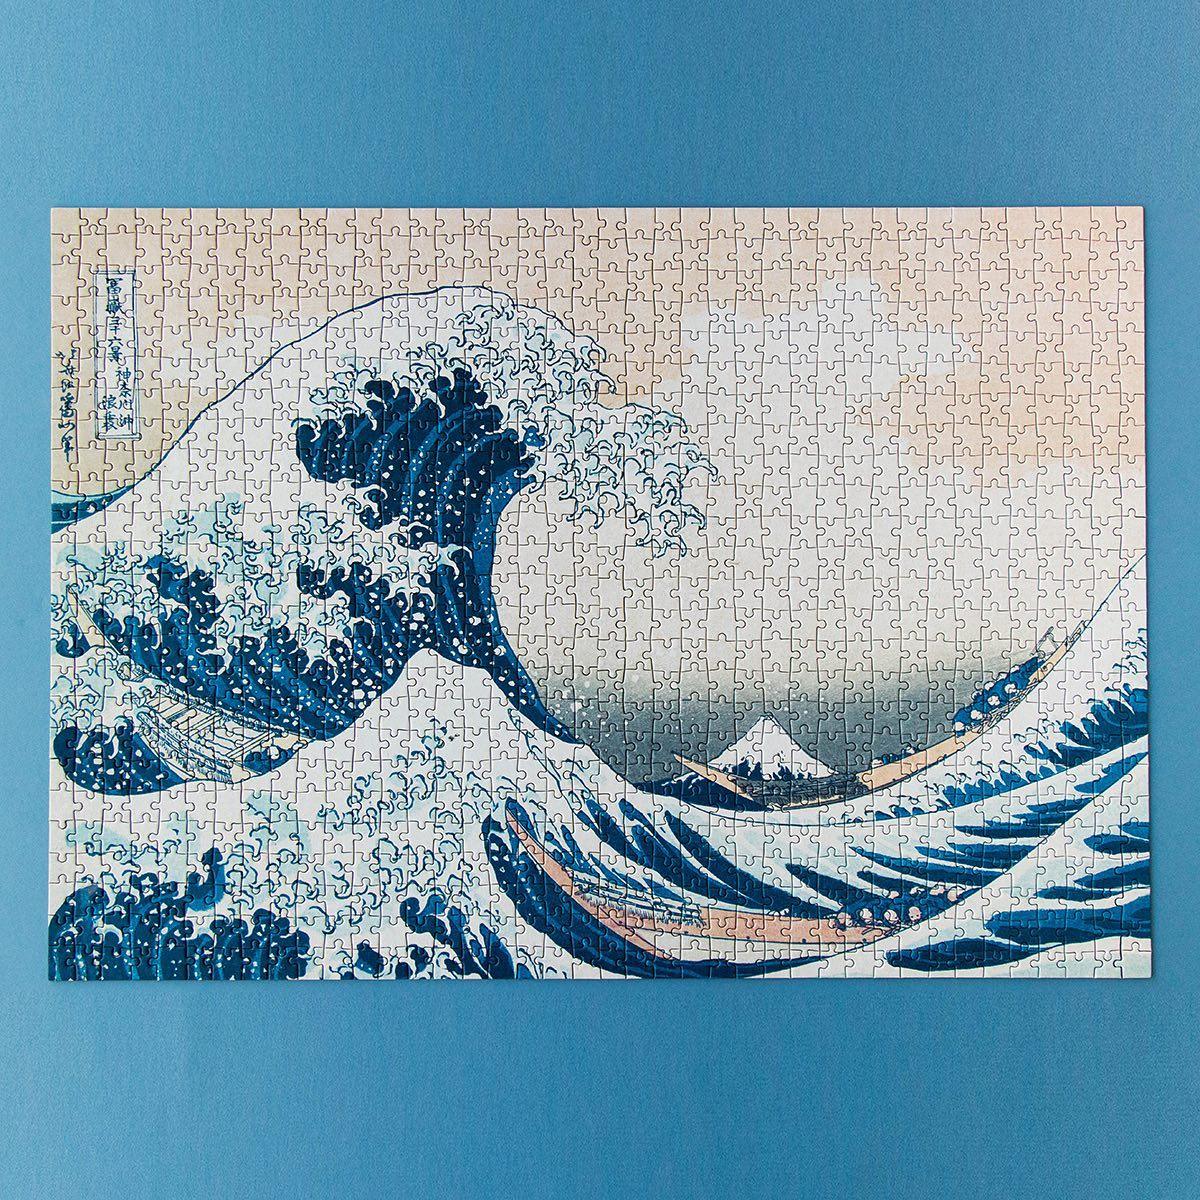 Londji: puzzle The Wave Hokusai 1000 el. - Noski Noski